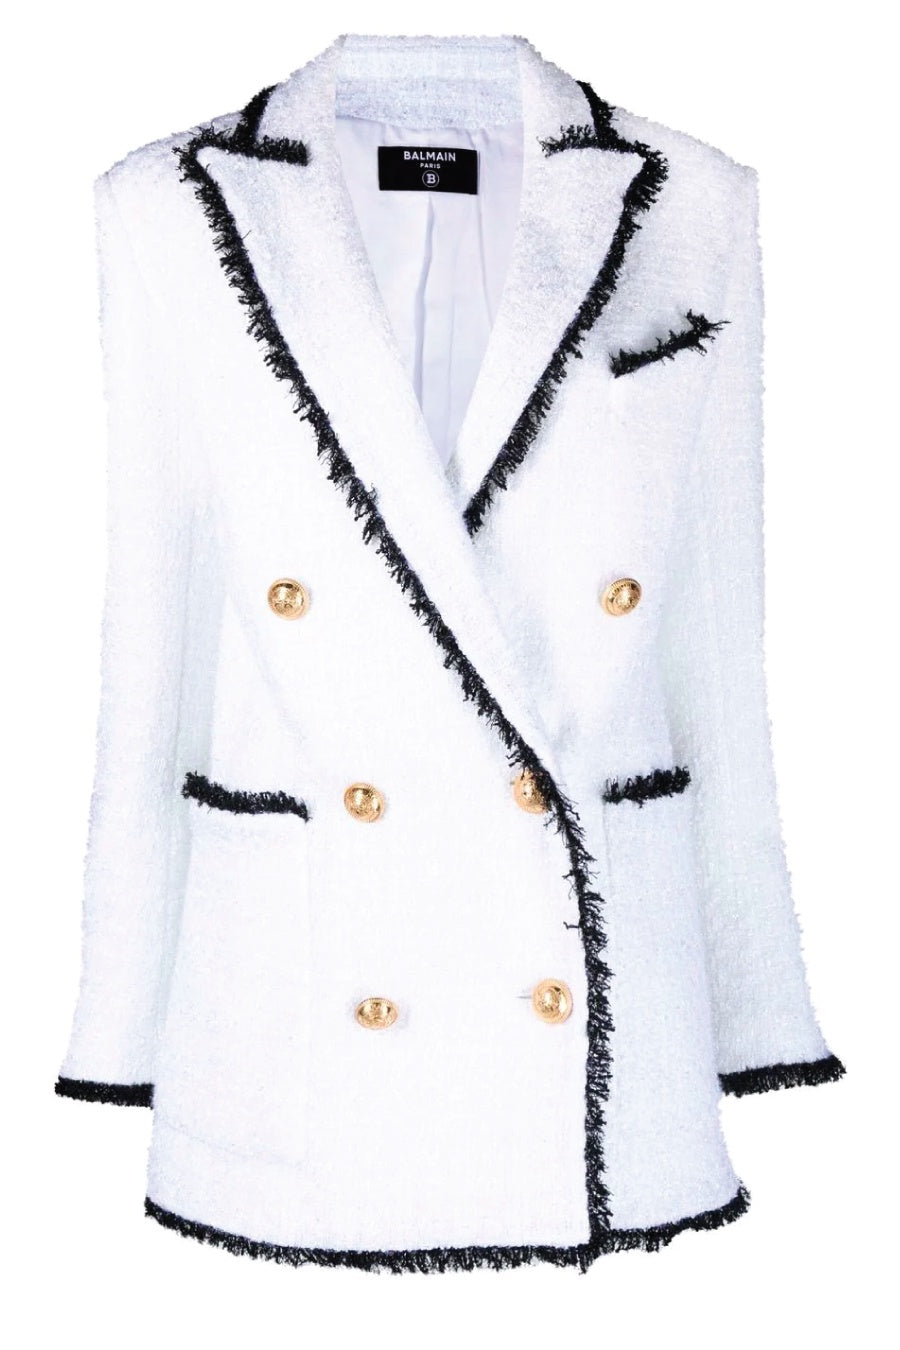 Balmain 6 Button Fringed Tweed Blazer - White/ Black